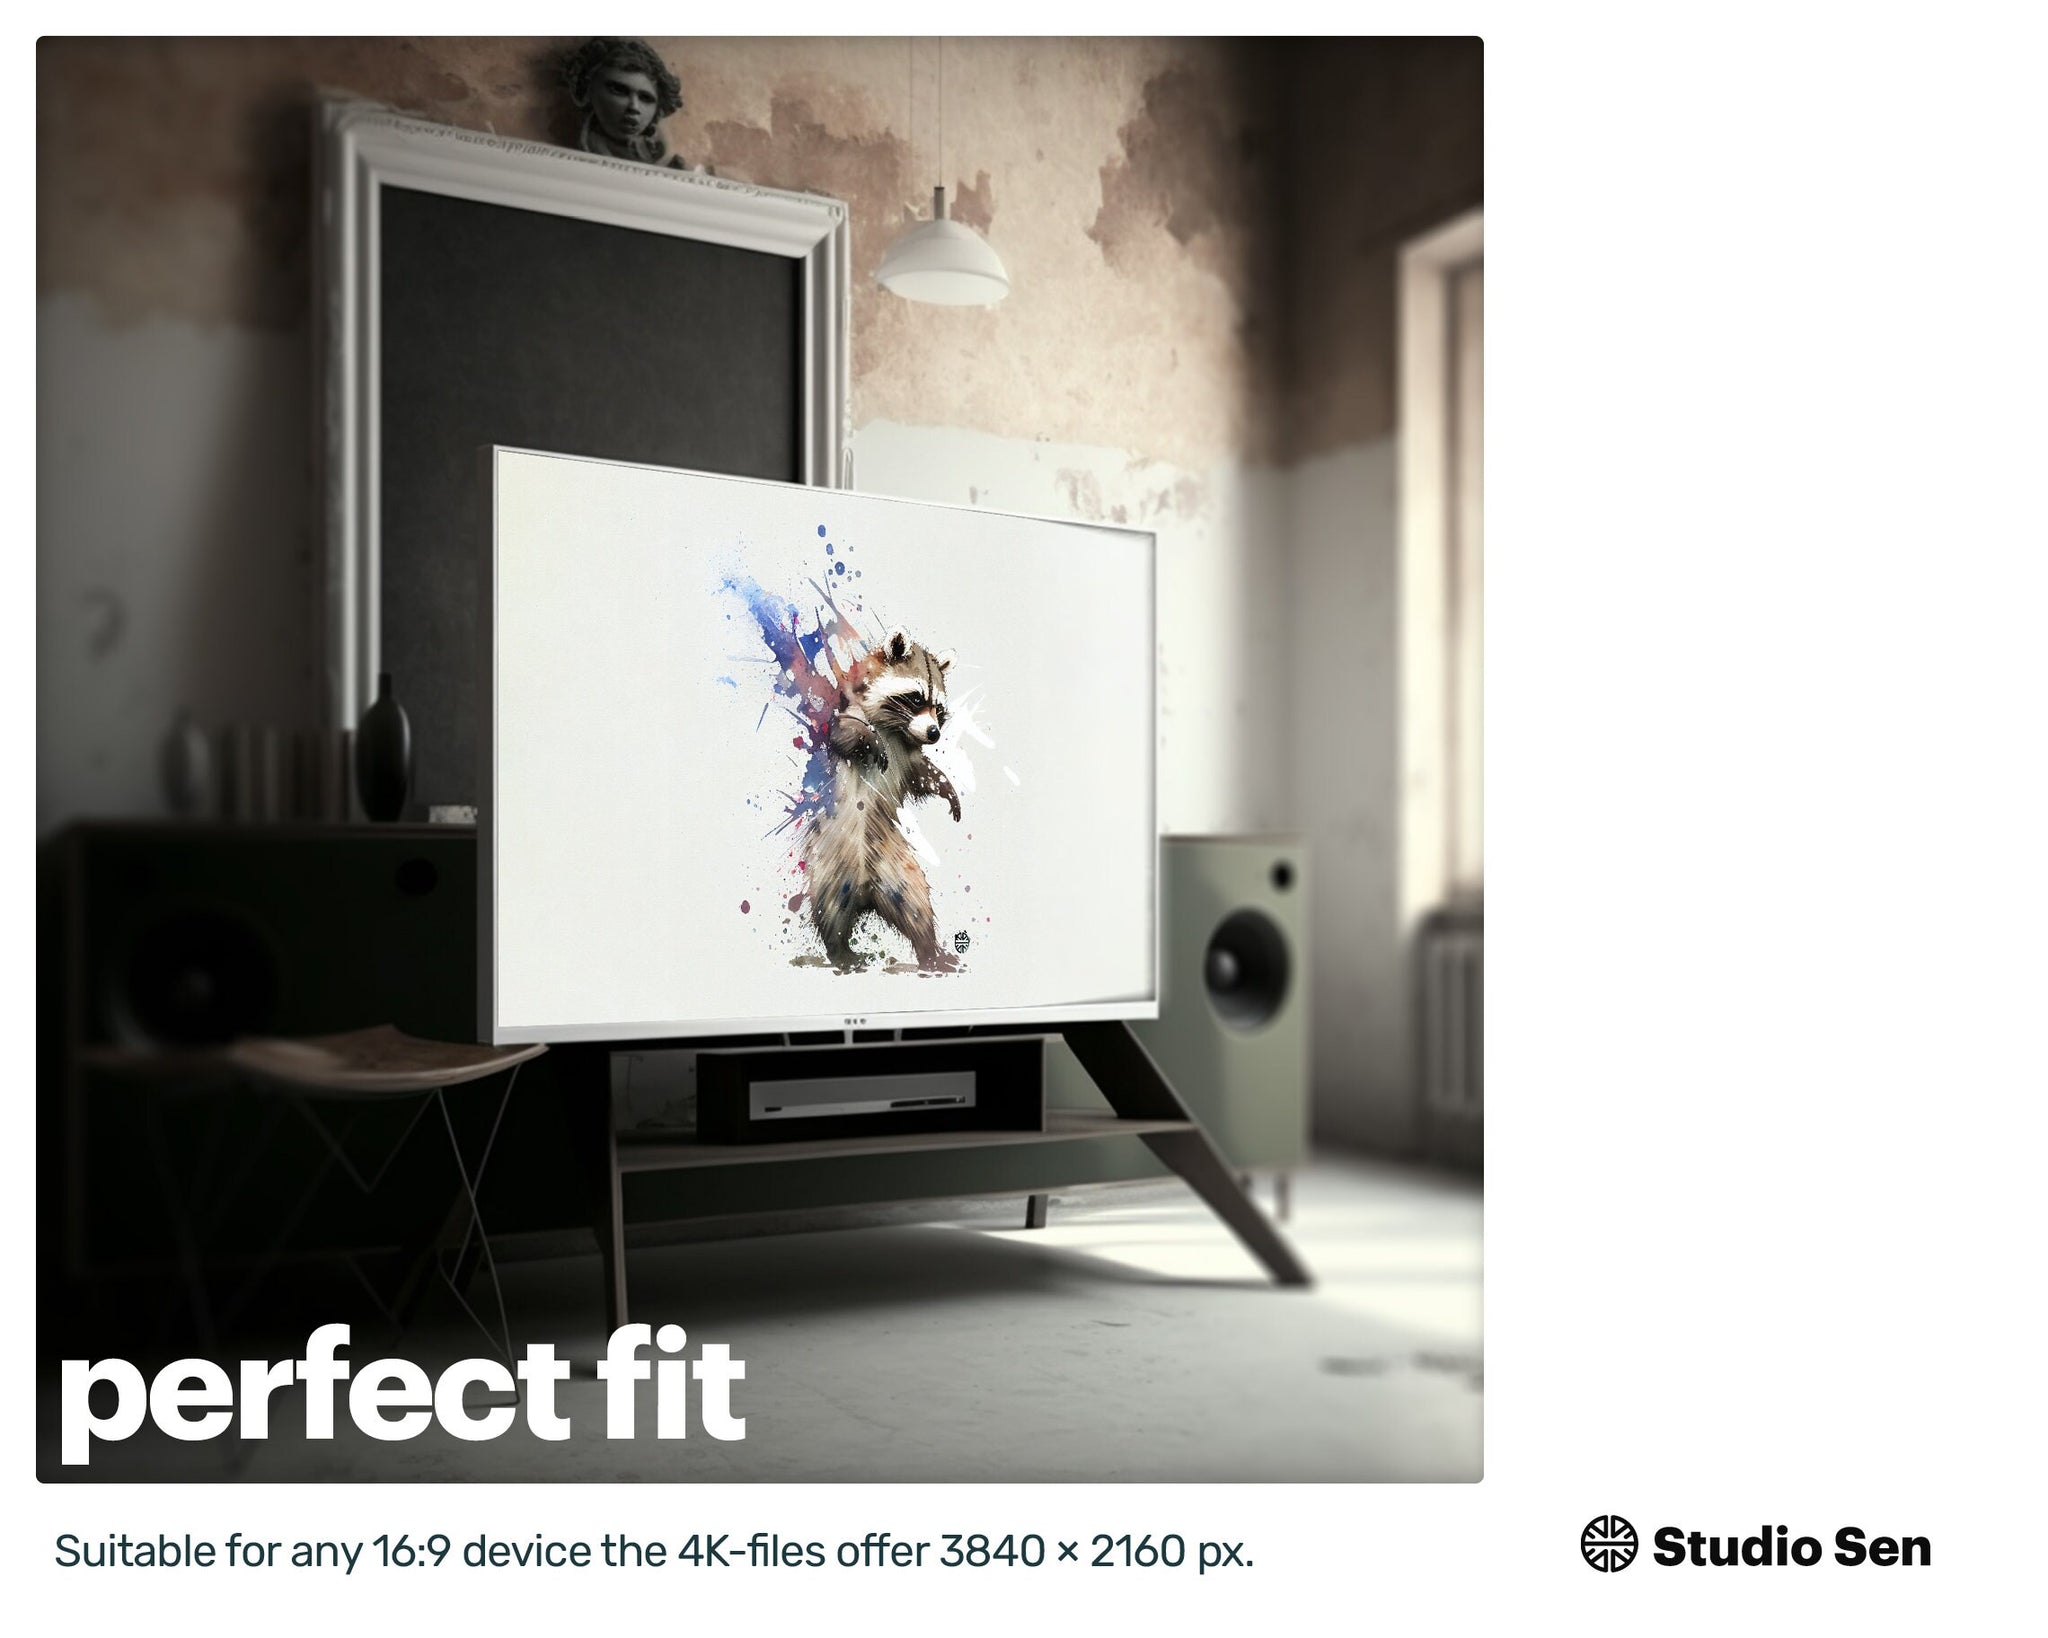 Samsung Art TV, Racoon Dance, premium download, drops and splashes, friendly wallpaper, art for kids